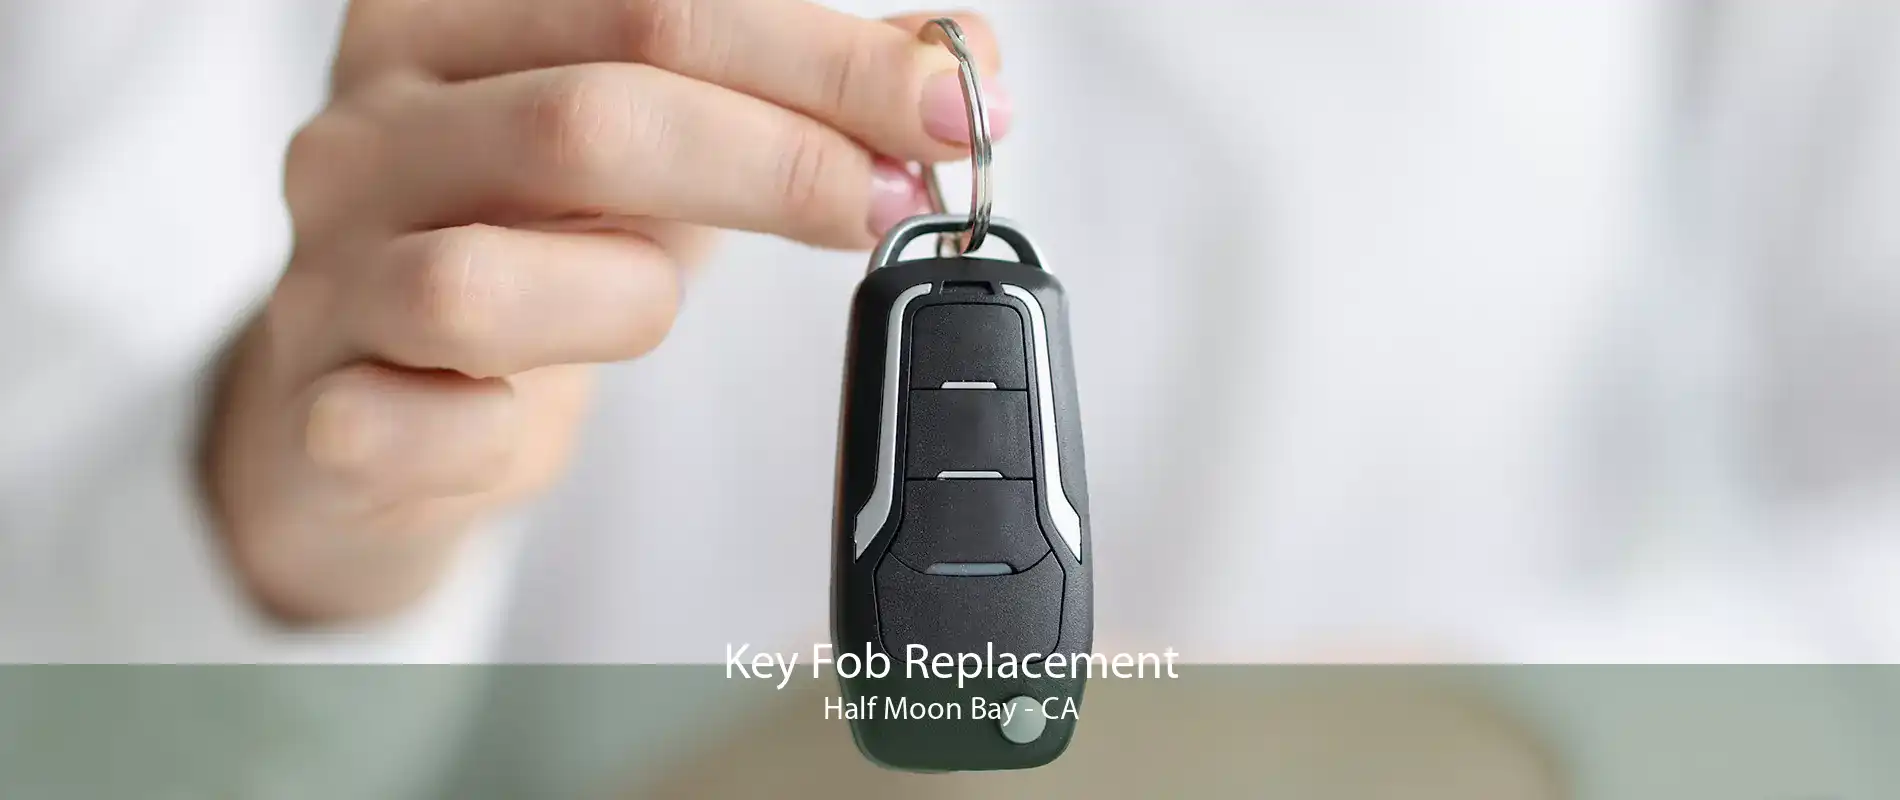 Key Fob Replacement Half Moon Bay - CA